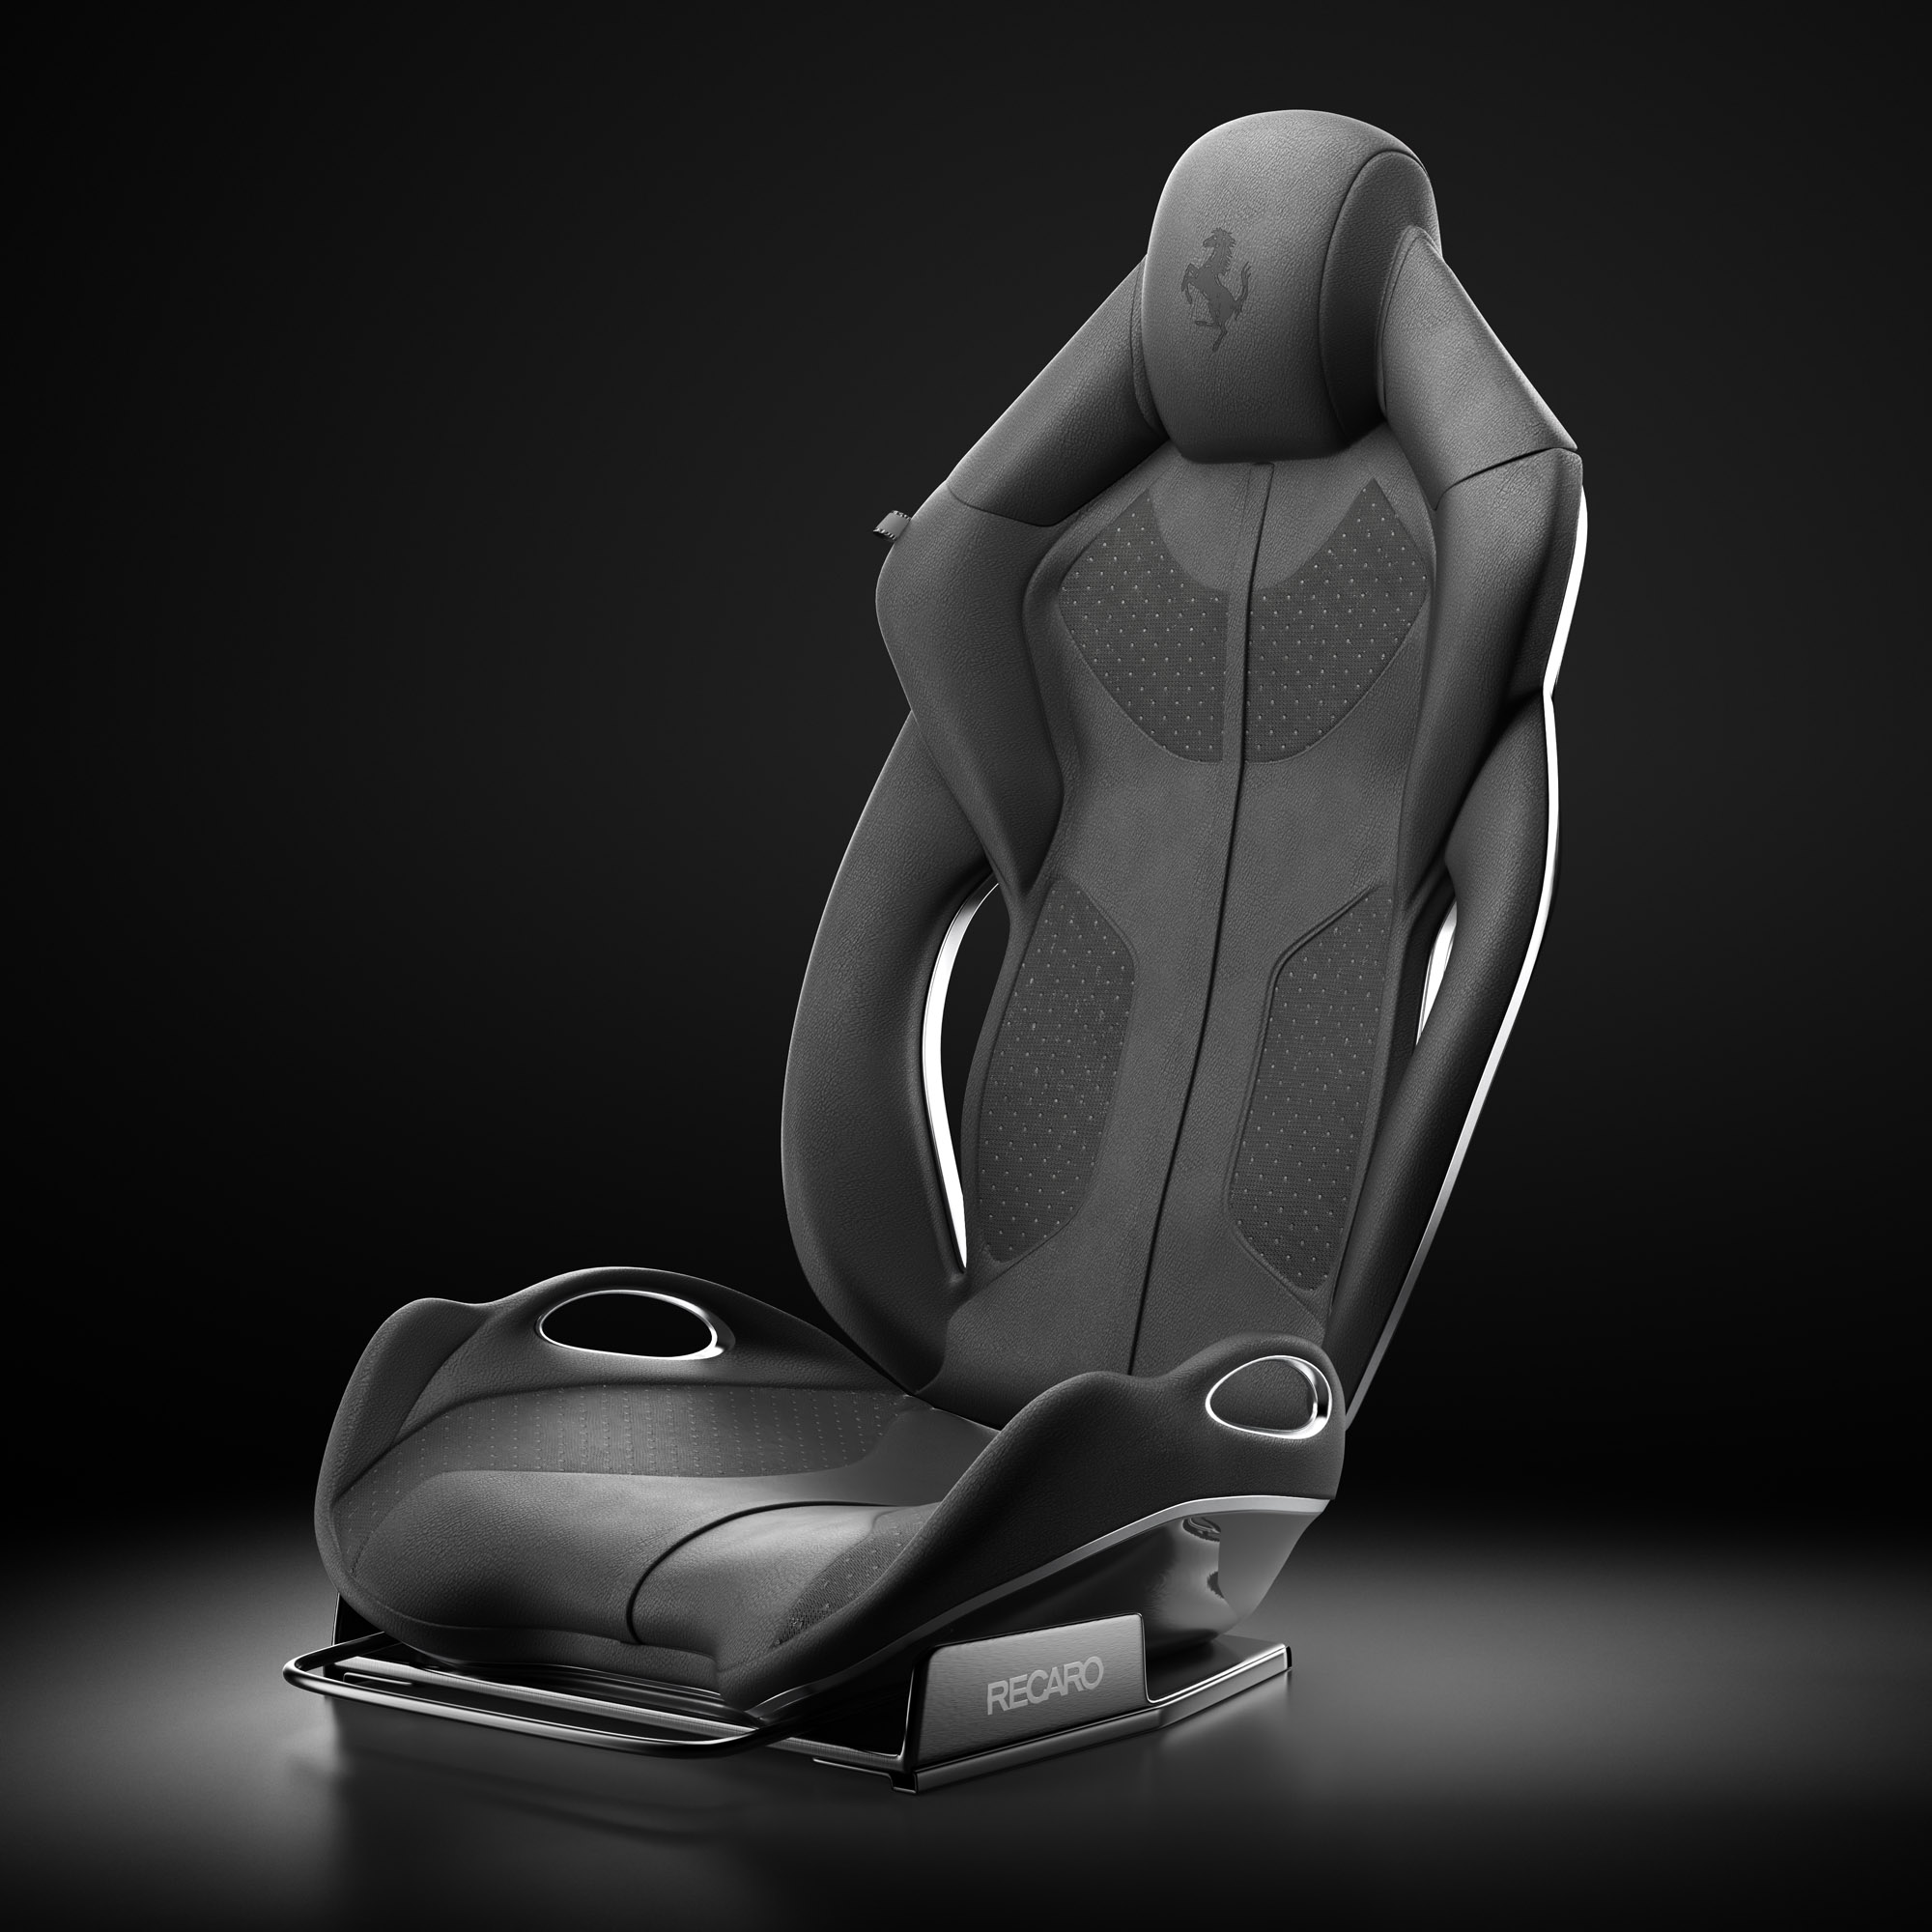 Ferrari Seat CGI 3D Product Render Wipdesigns